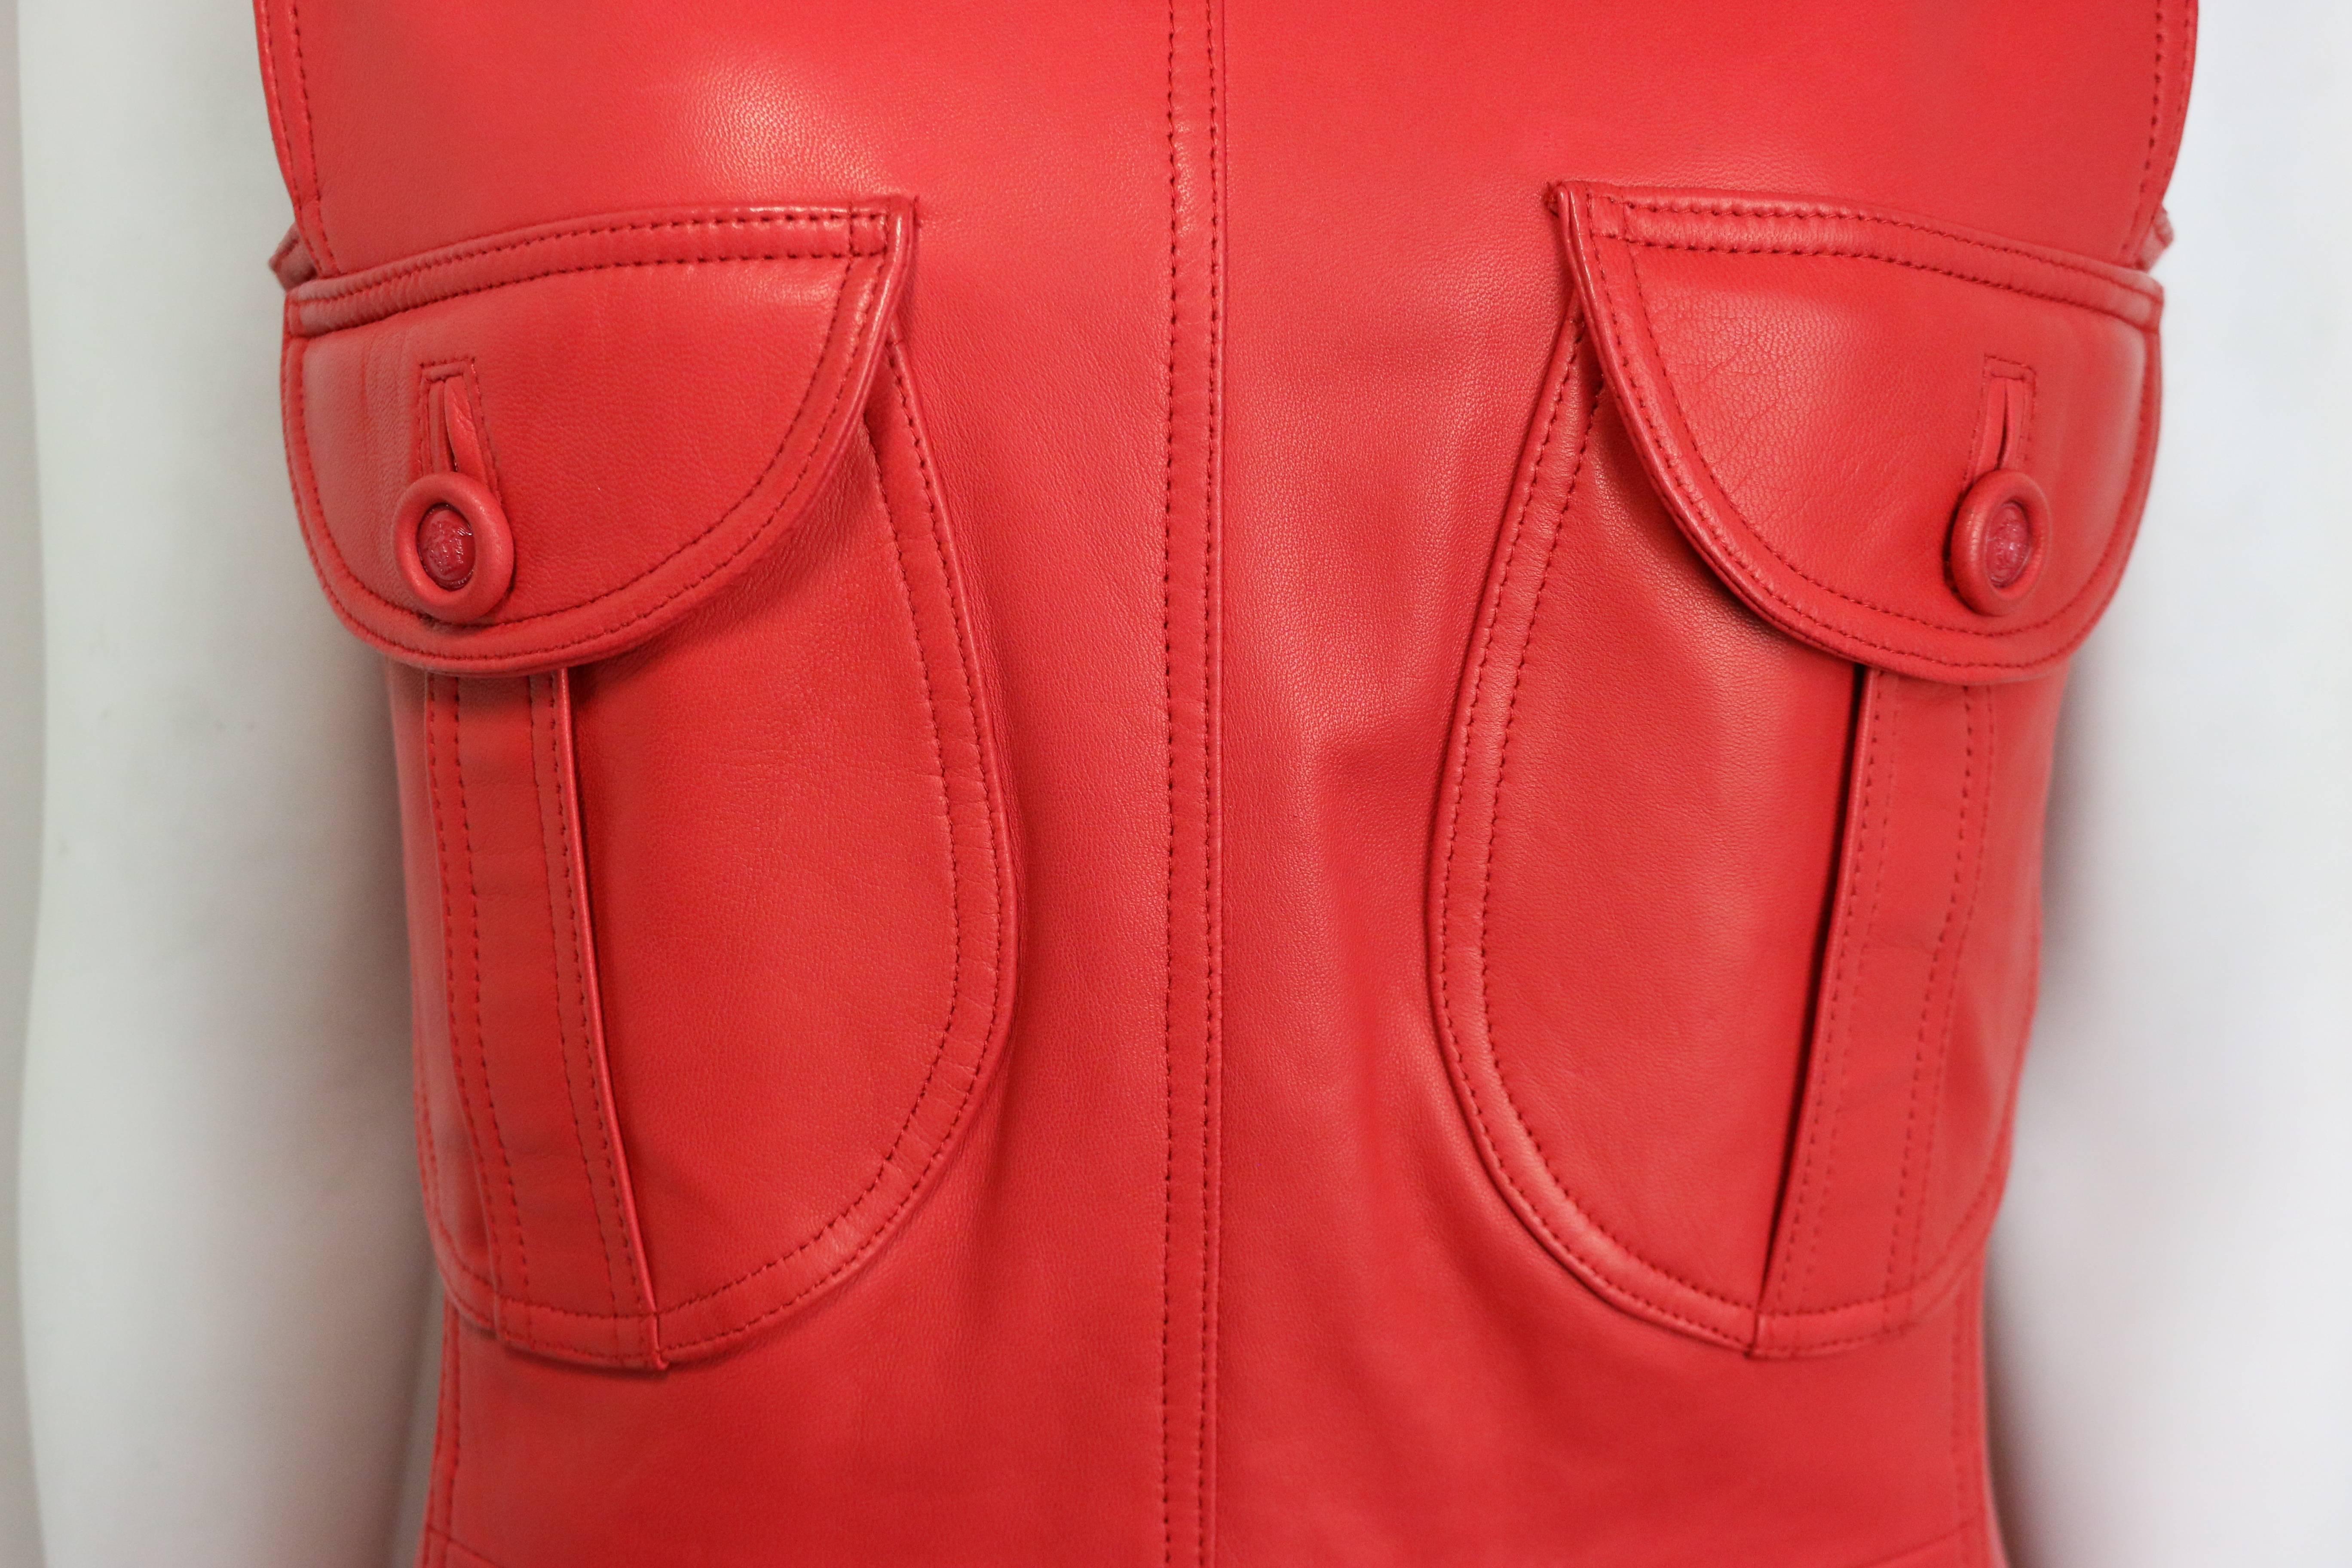 donatella versace leather dress 90s